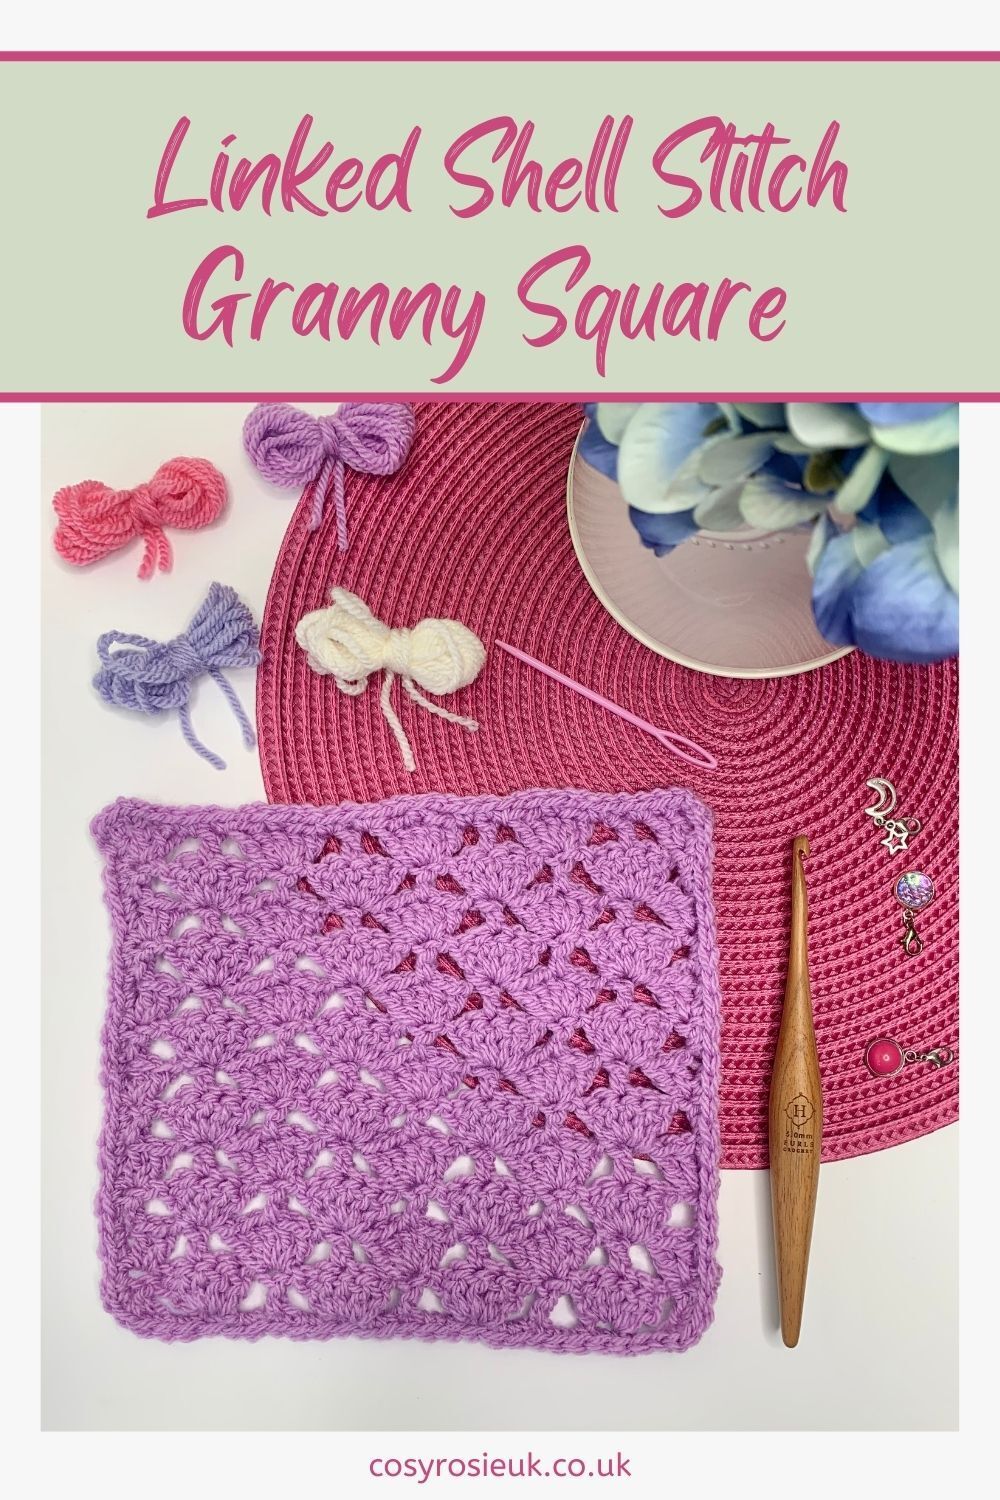 Linked Shell Stitch Granny Square